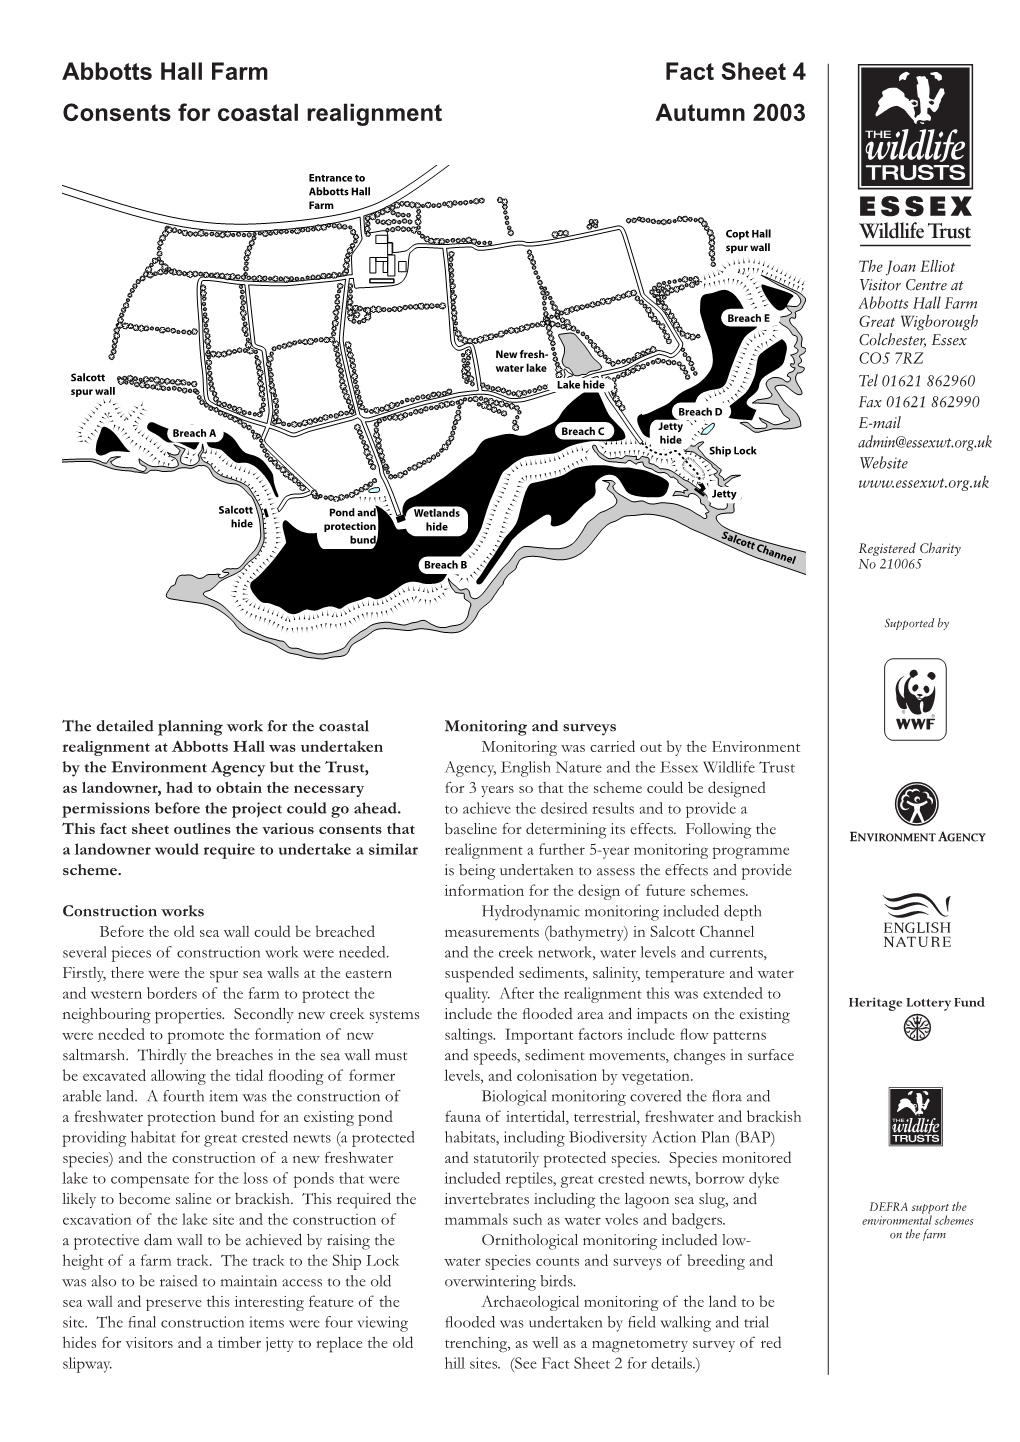 Abbotts Hall Farm Fact Sheet 4 Consents for Coastal Realignment Autumn 2003